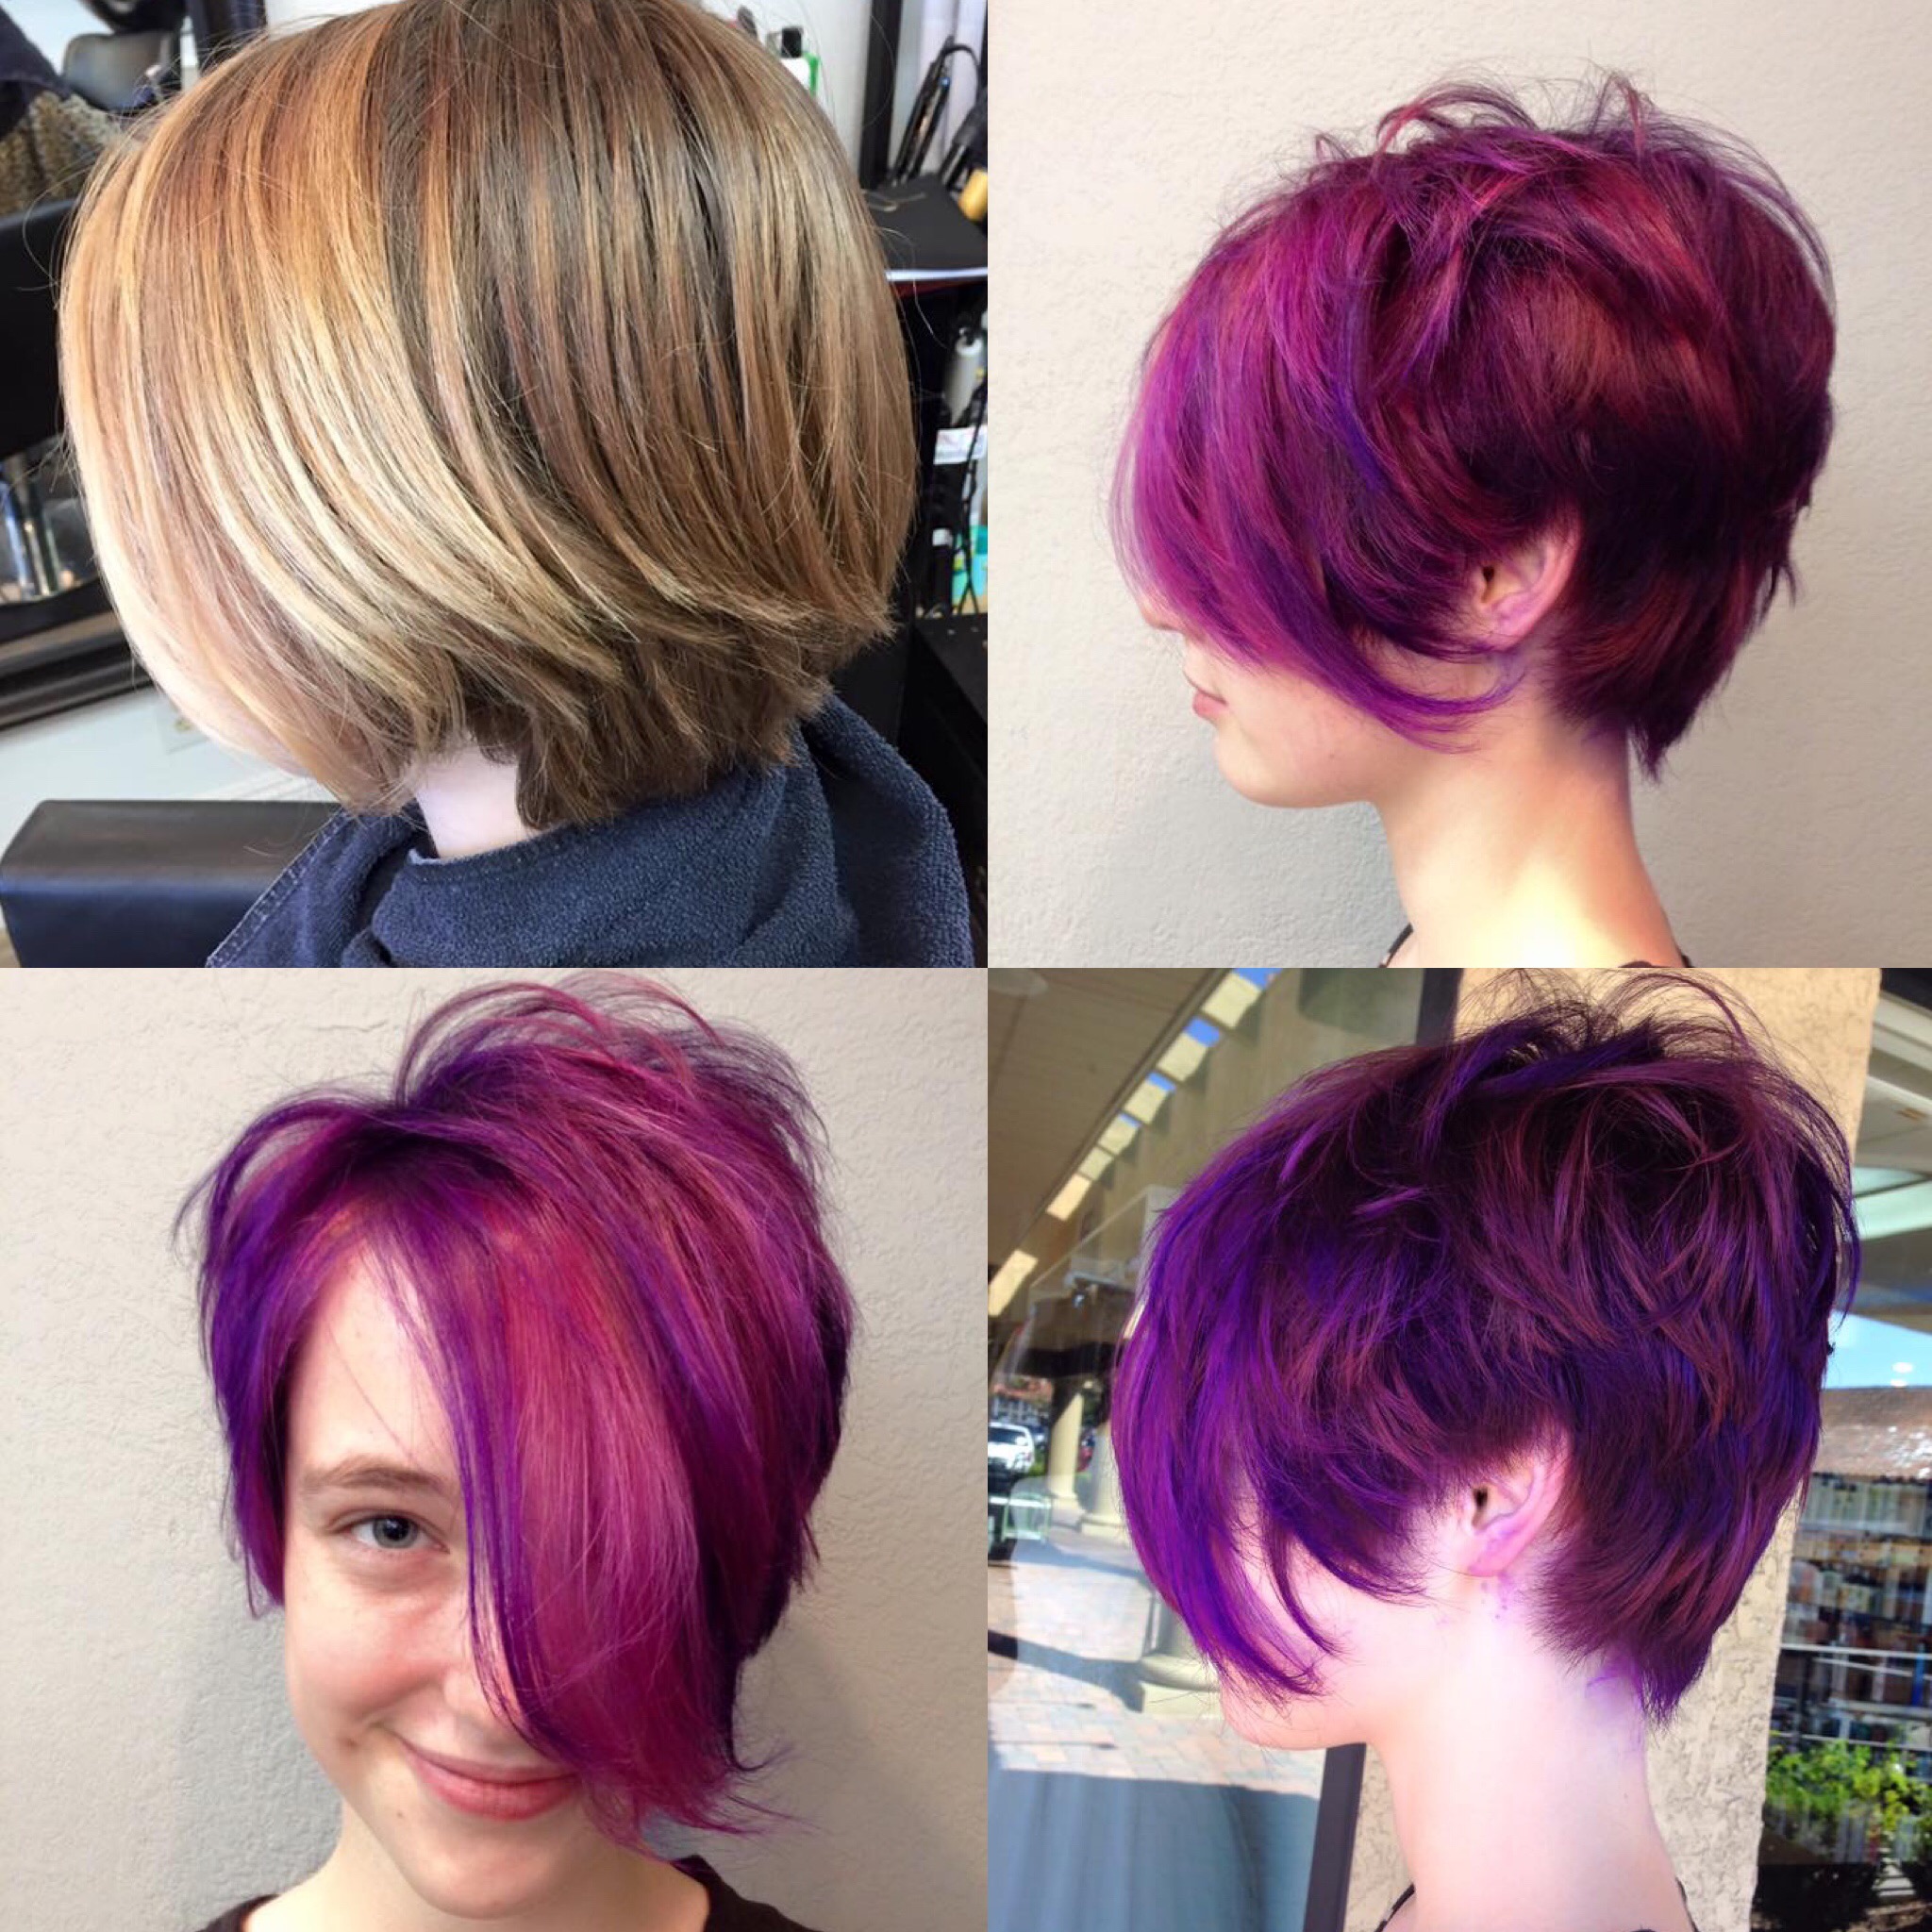 Advanced Color Services | Hair by Joey, Hair Salon Services Prescott, AZ